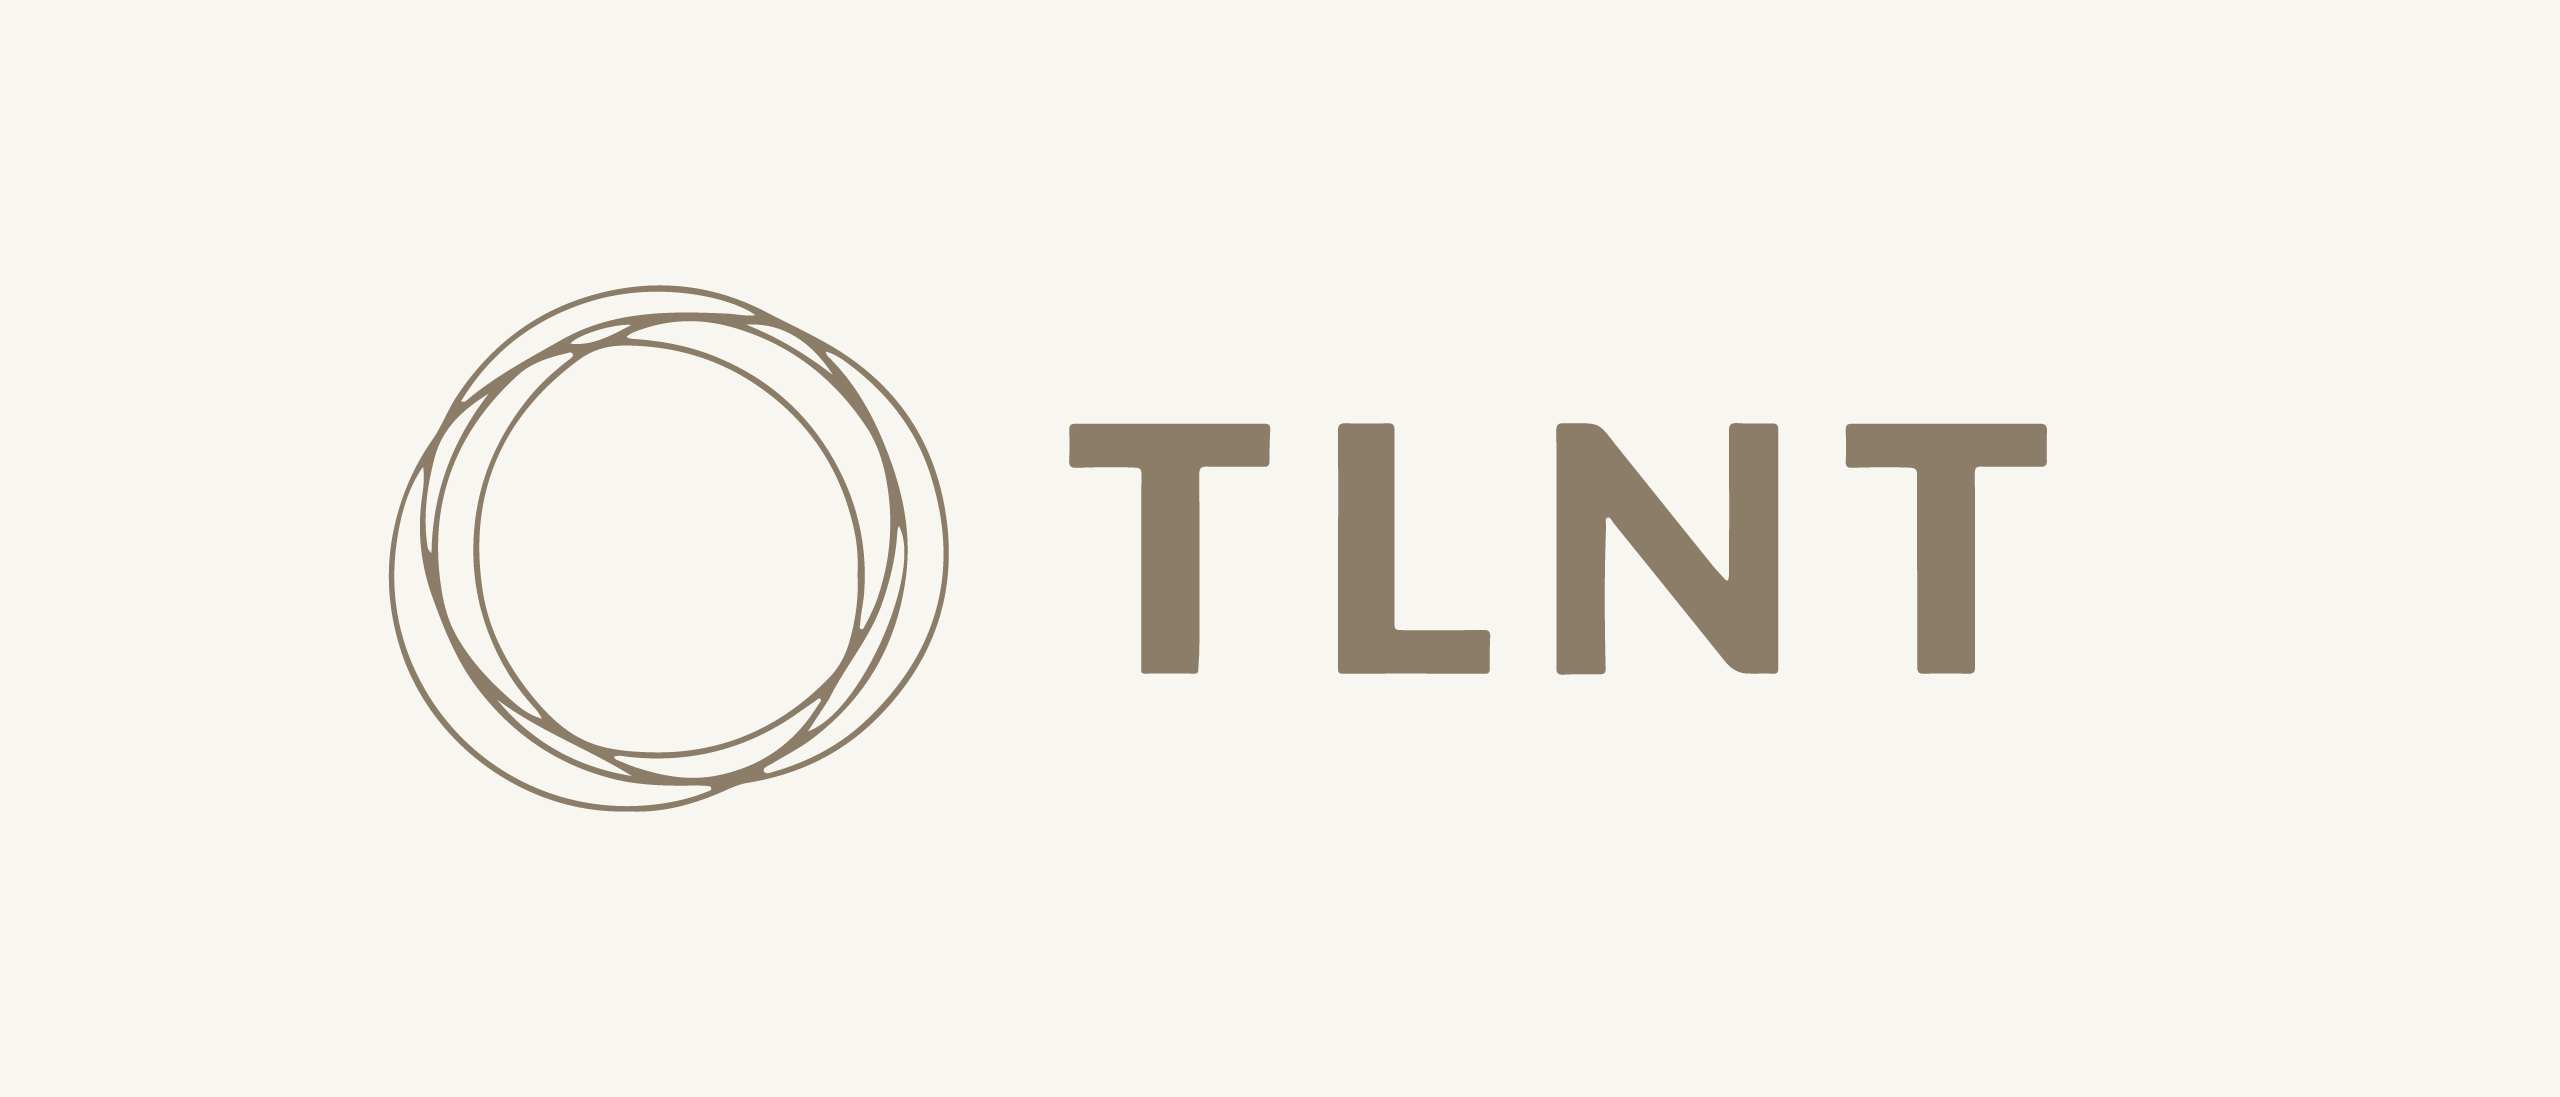 TLNT Logo